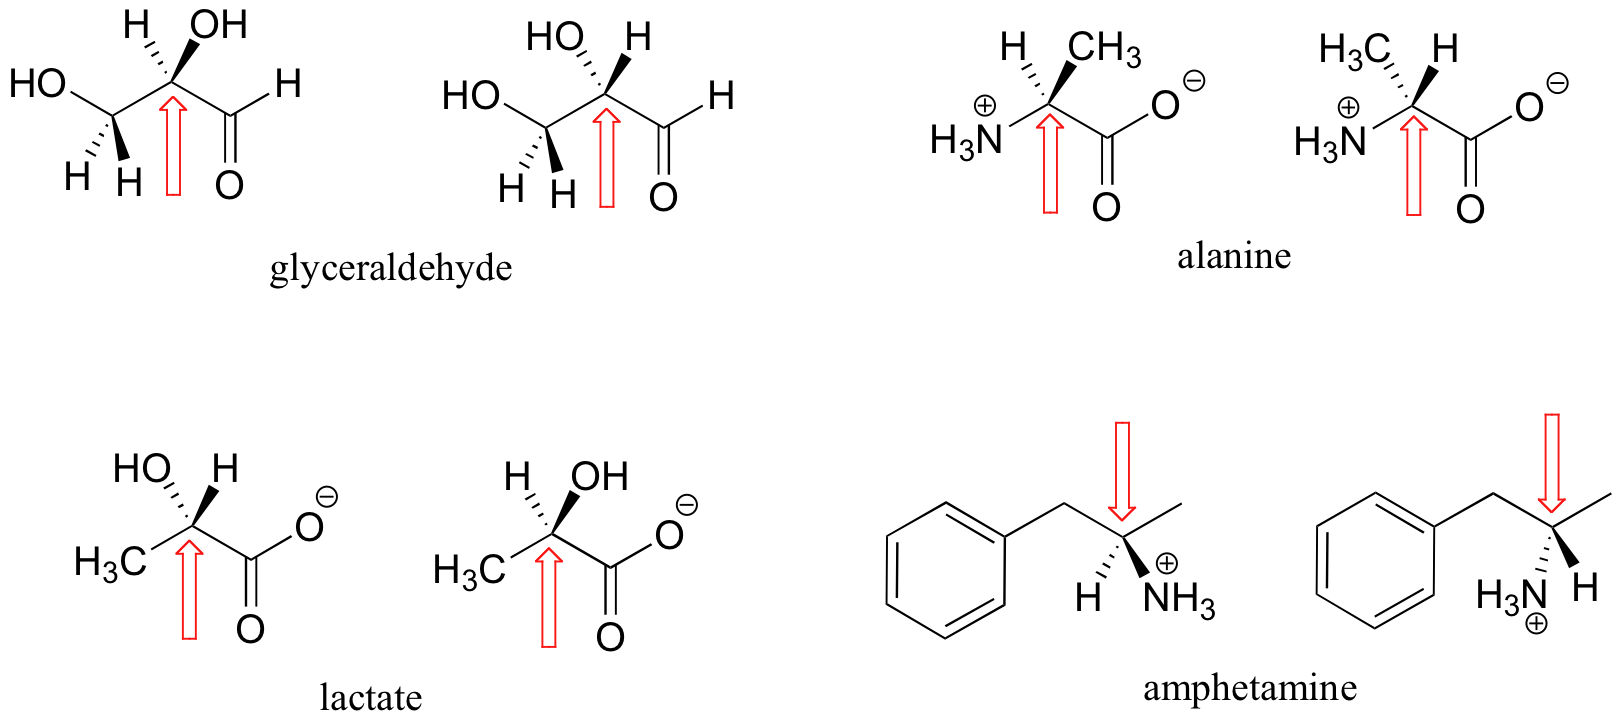 Wedge-dash enantiomers of glyceraldehyde, alanine, lactate, and amphetamine. 